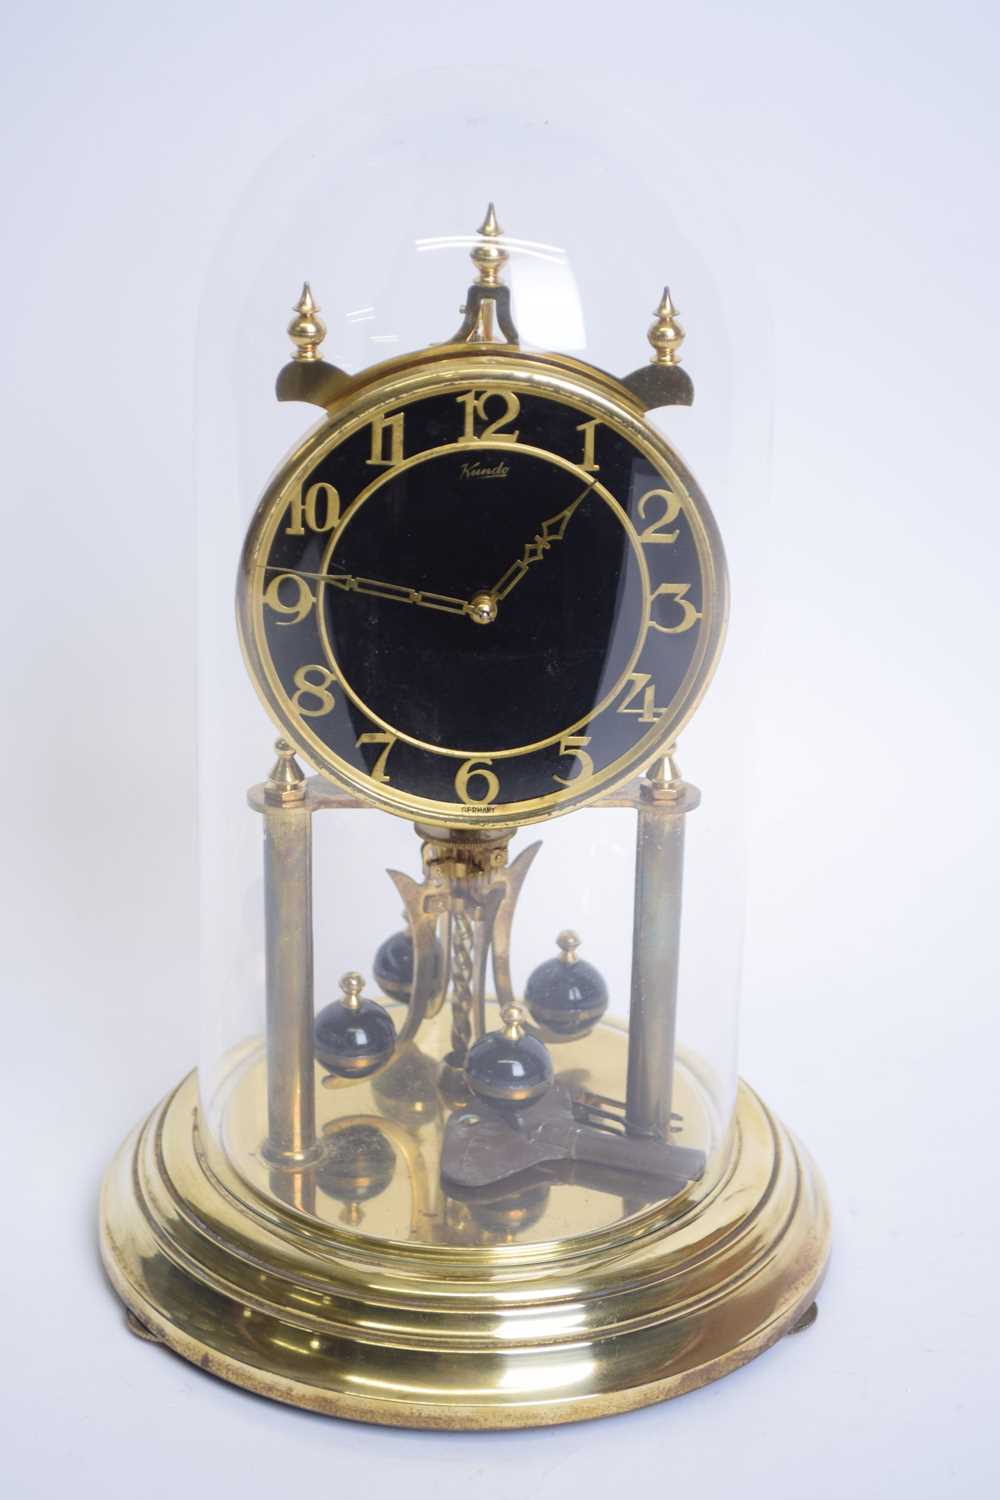 Kundo brass torsion or anniversary clock set under a glass dome, 30cm high